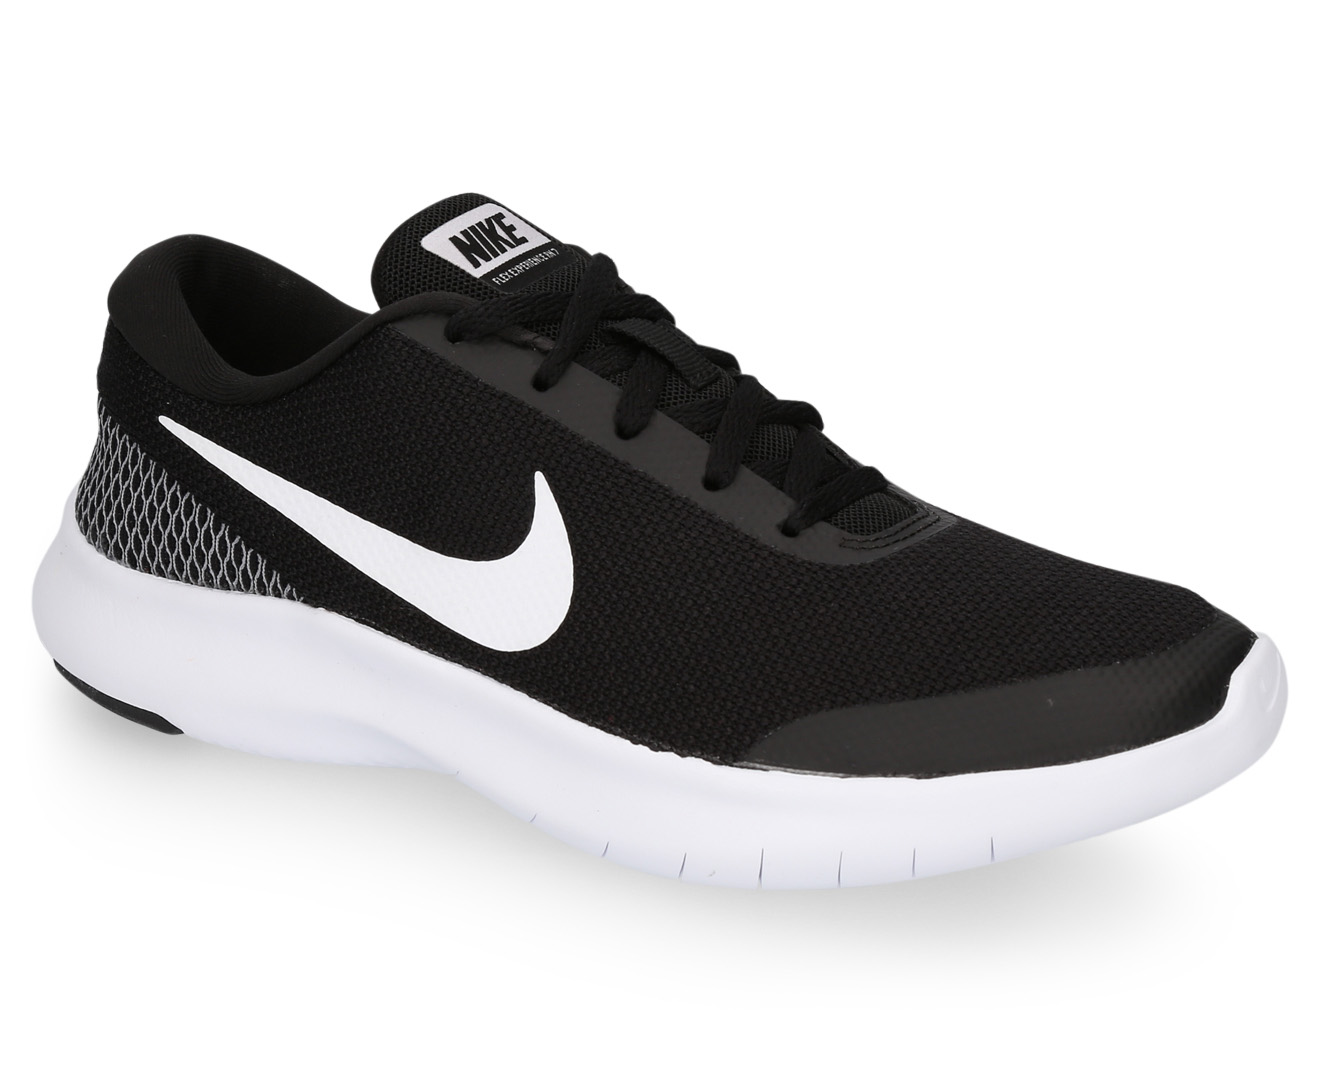 Nike Womens Flex Experience Rn 7 Shoe Black White Scoopon Shopping